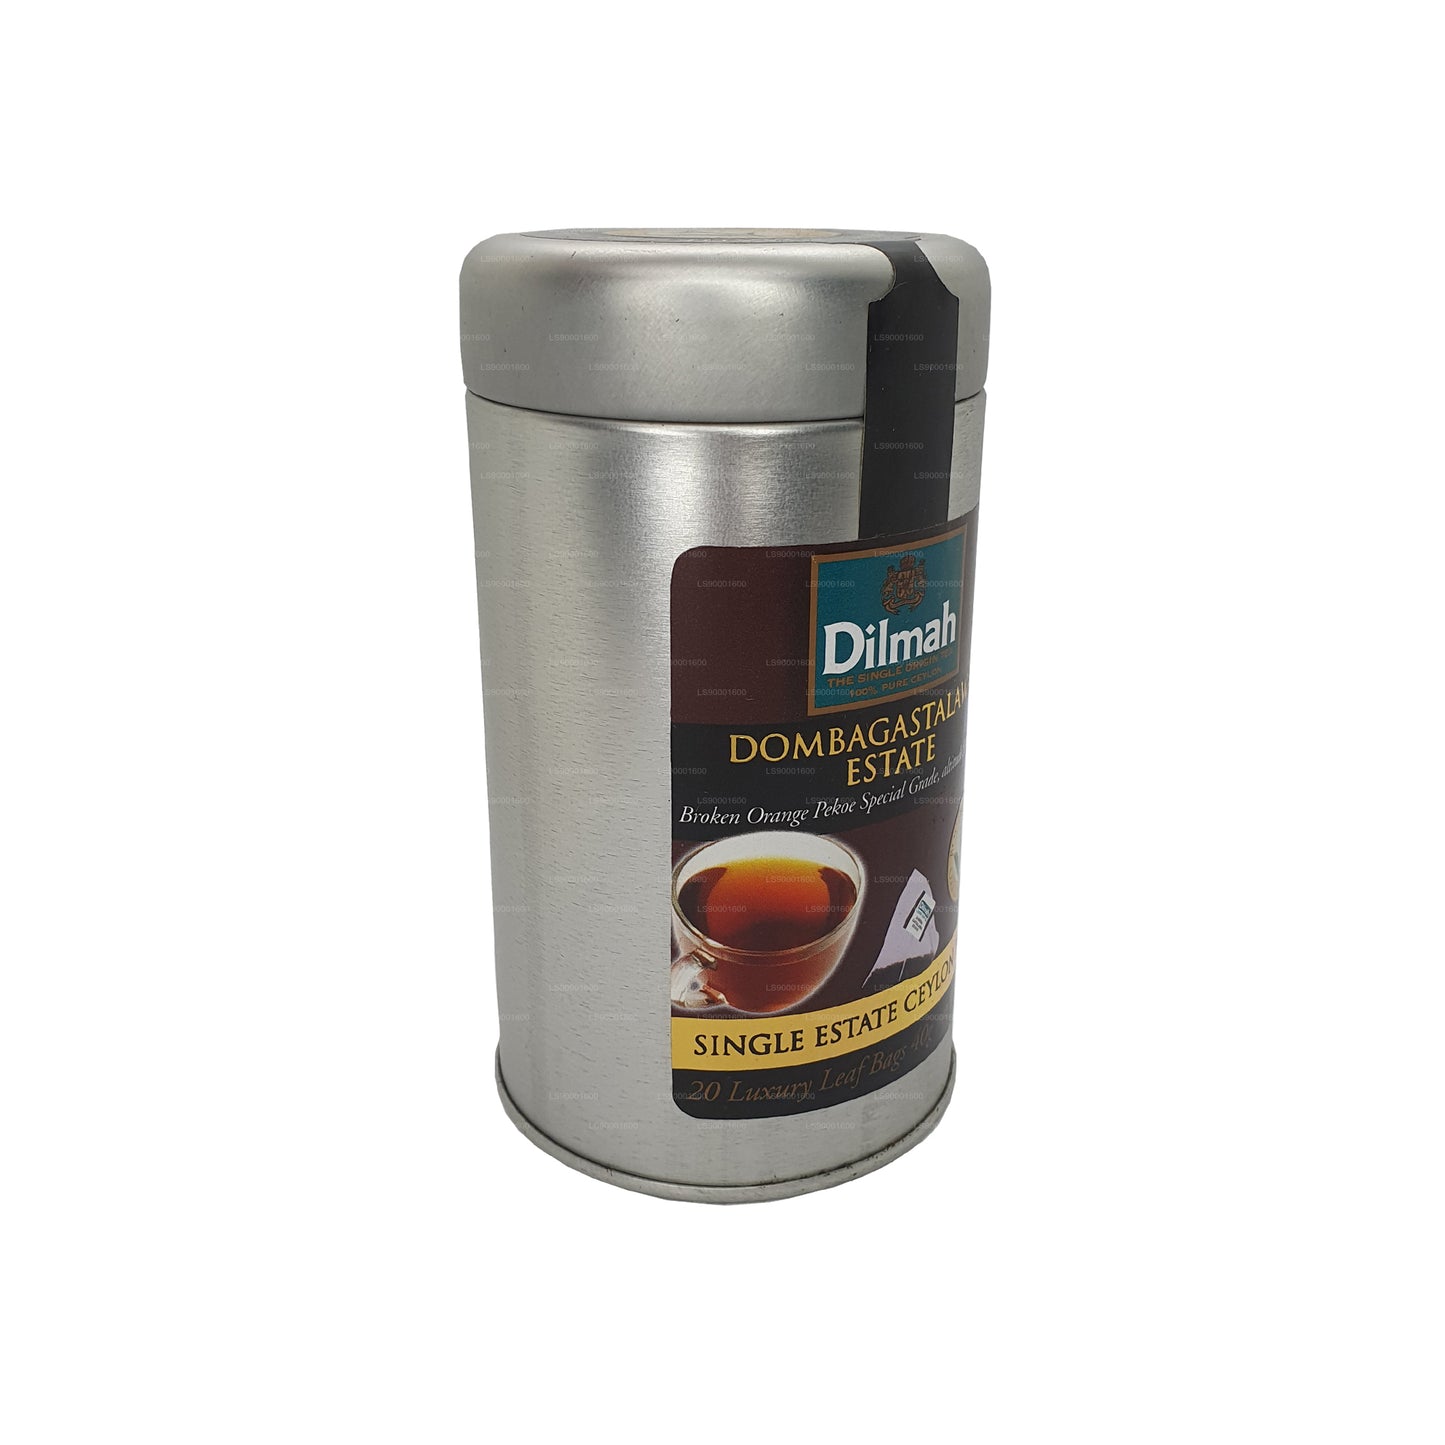 Dilmah Dombagastalawa 单一庄园茶罐 (40g)